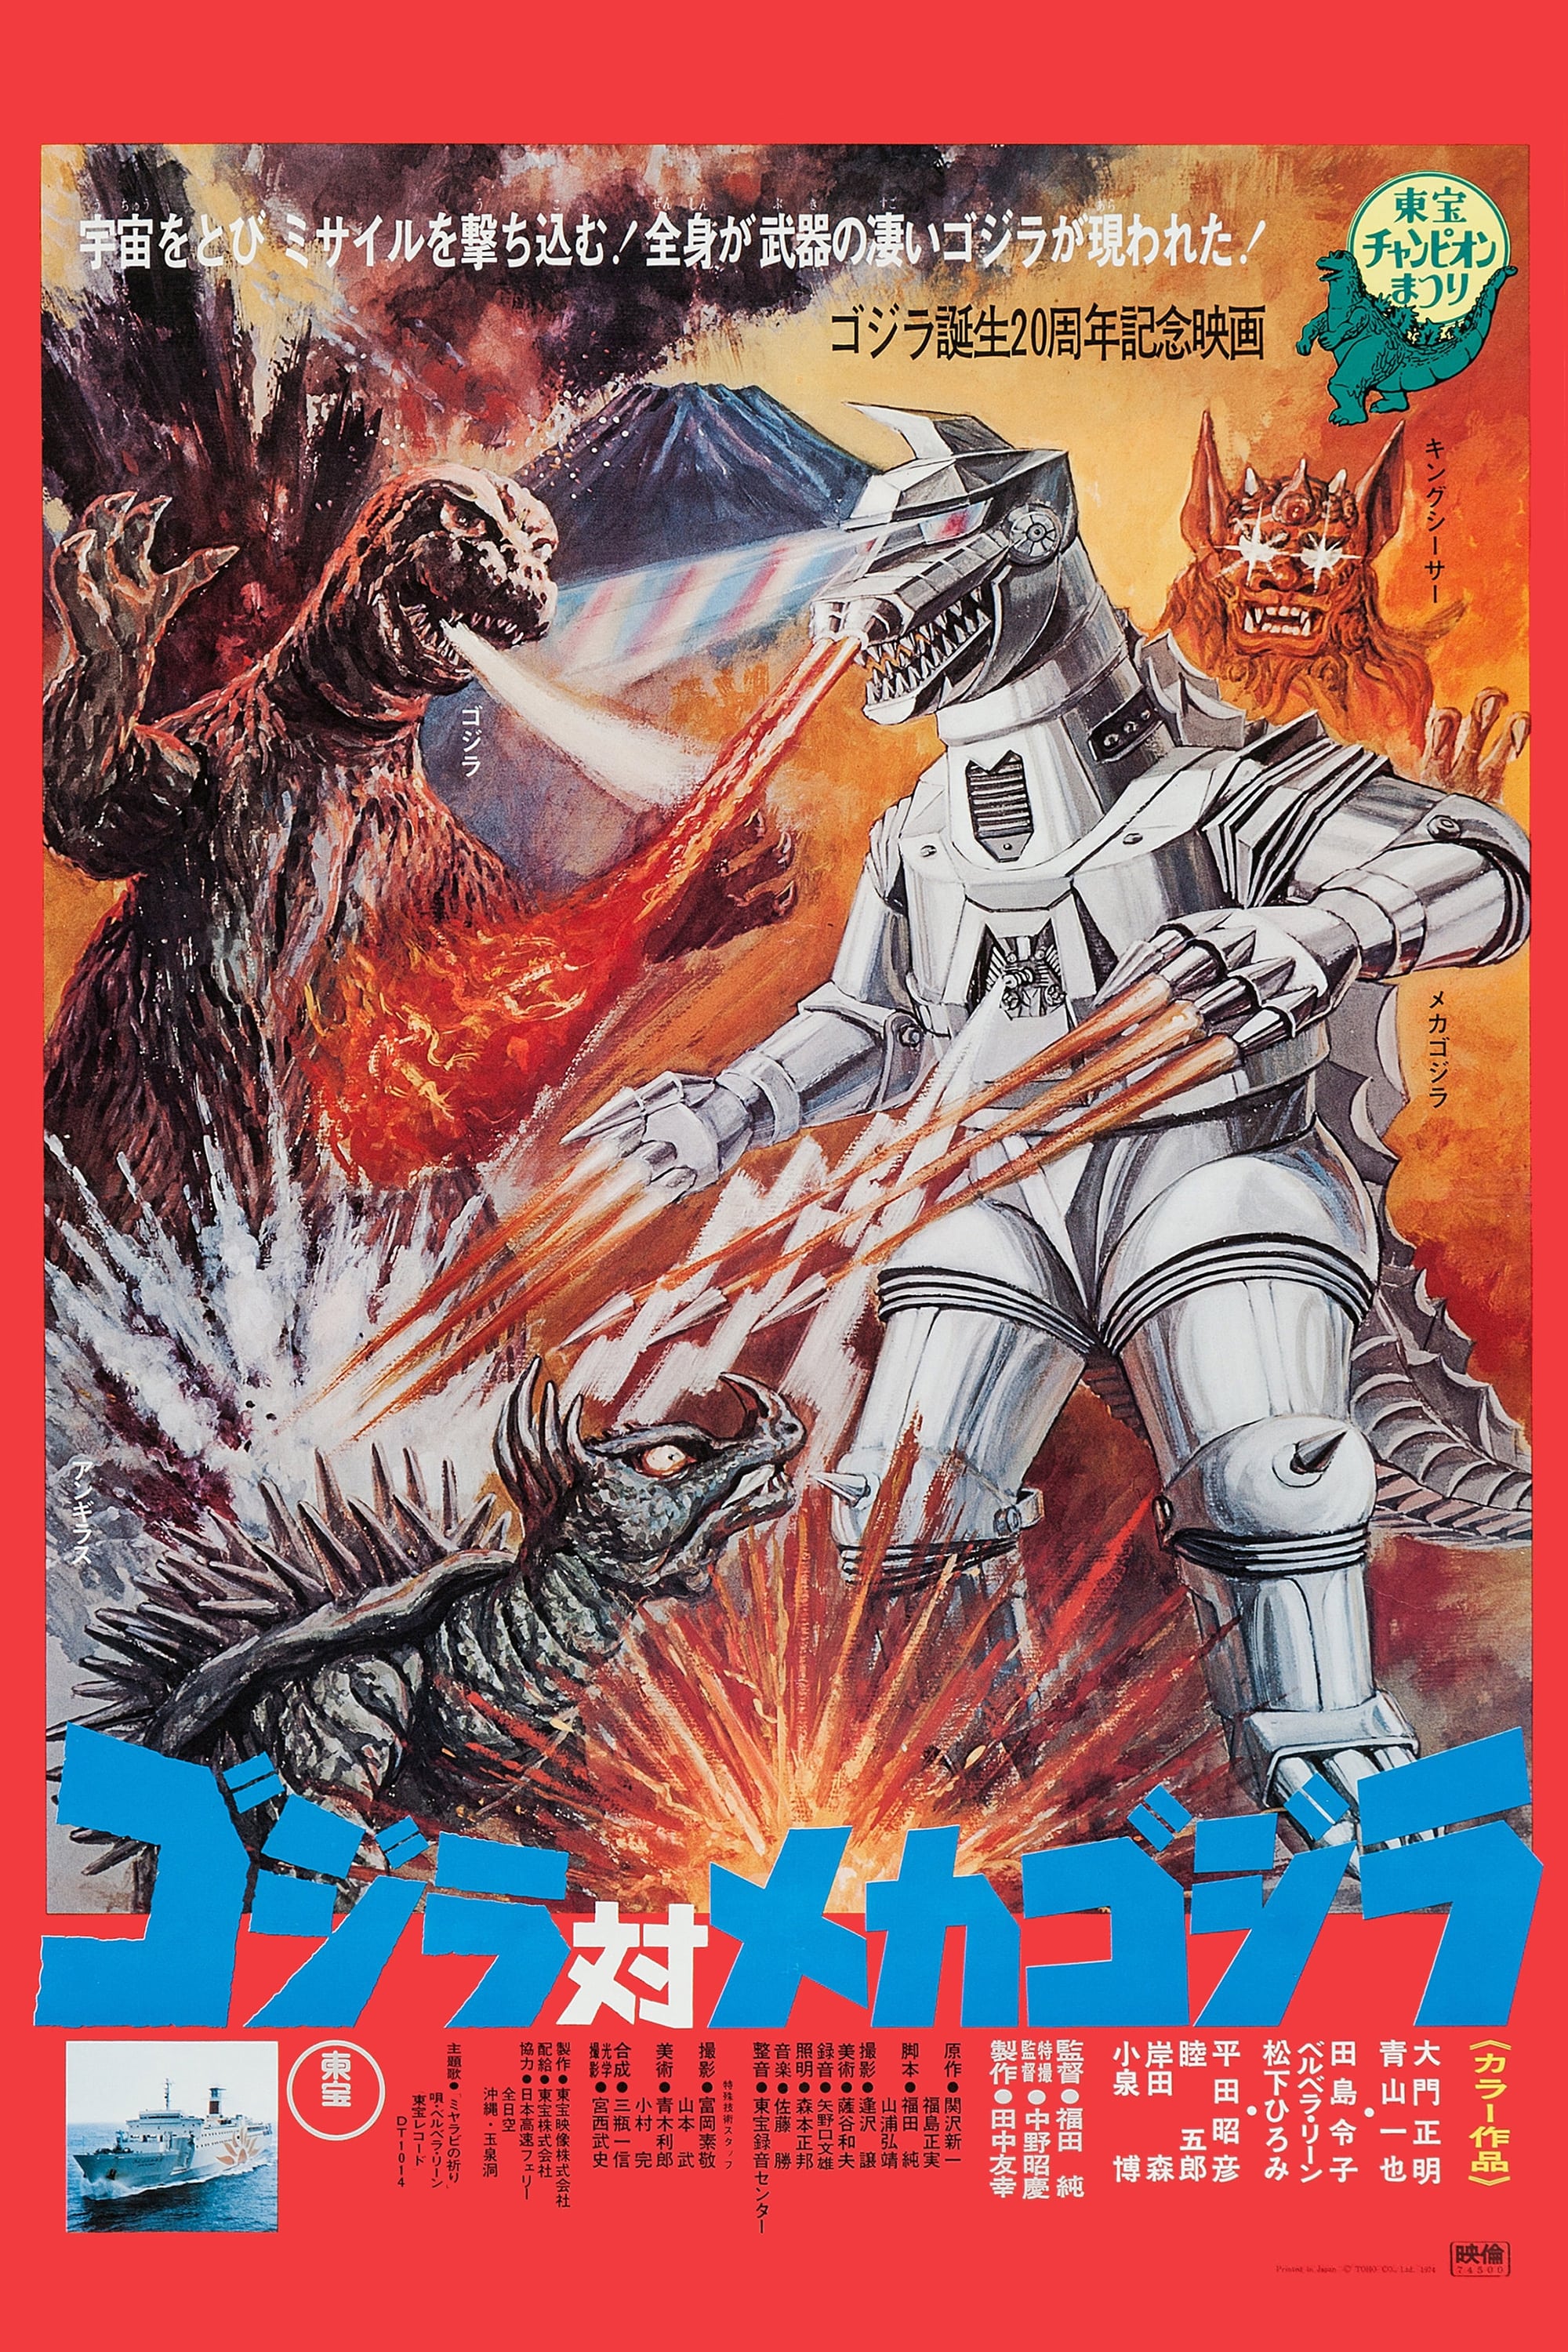 Godzilla Vs Mechagodzilla